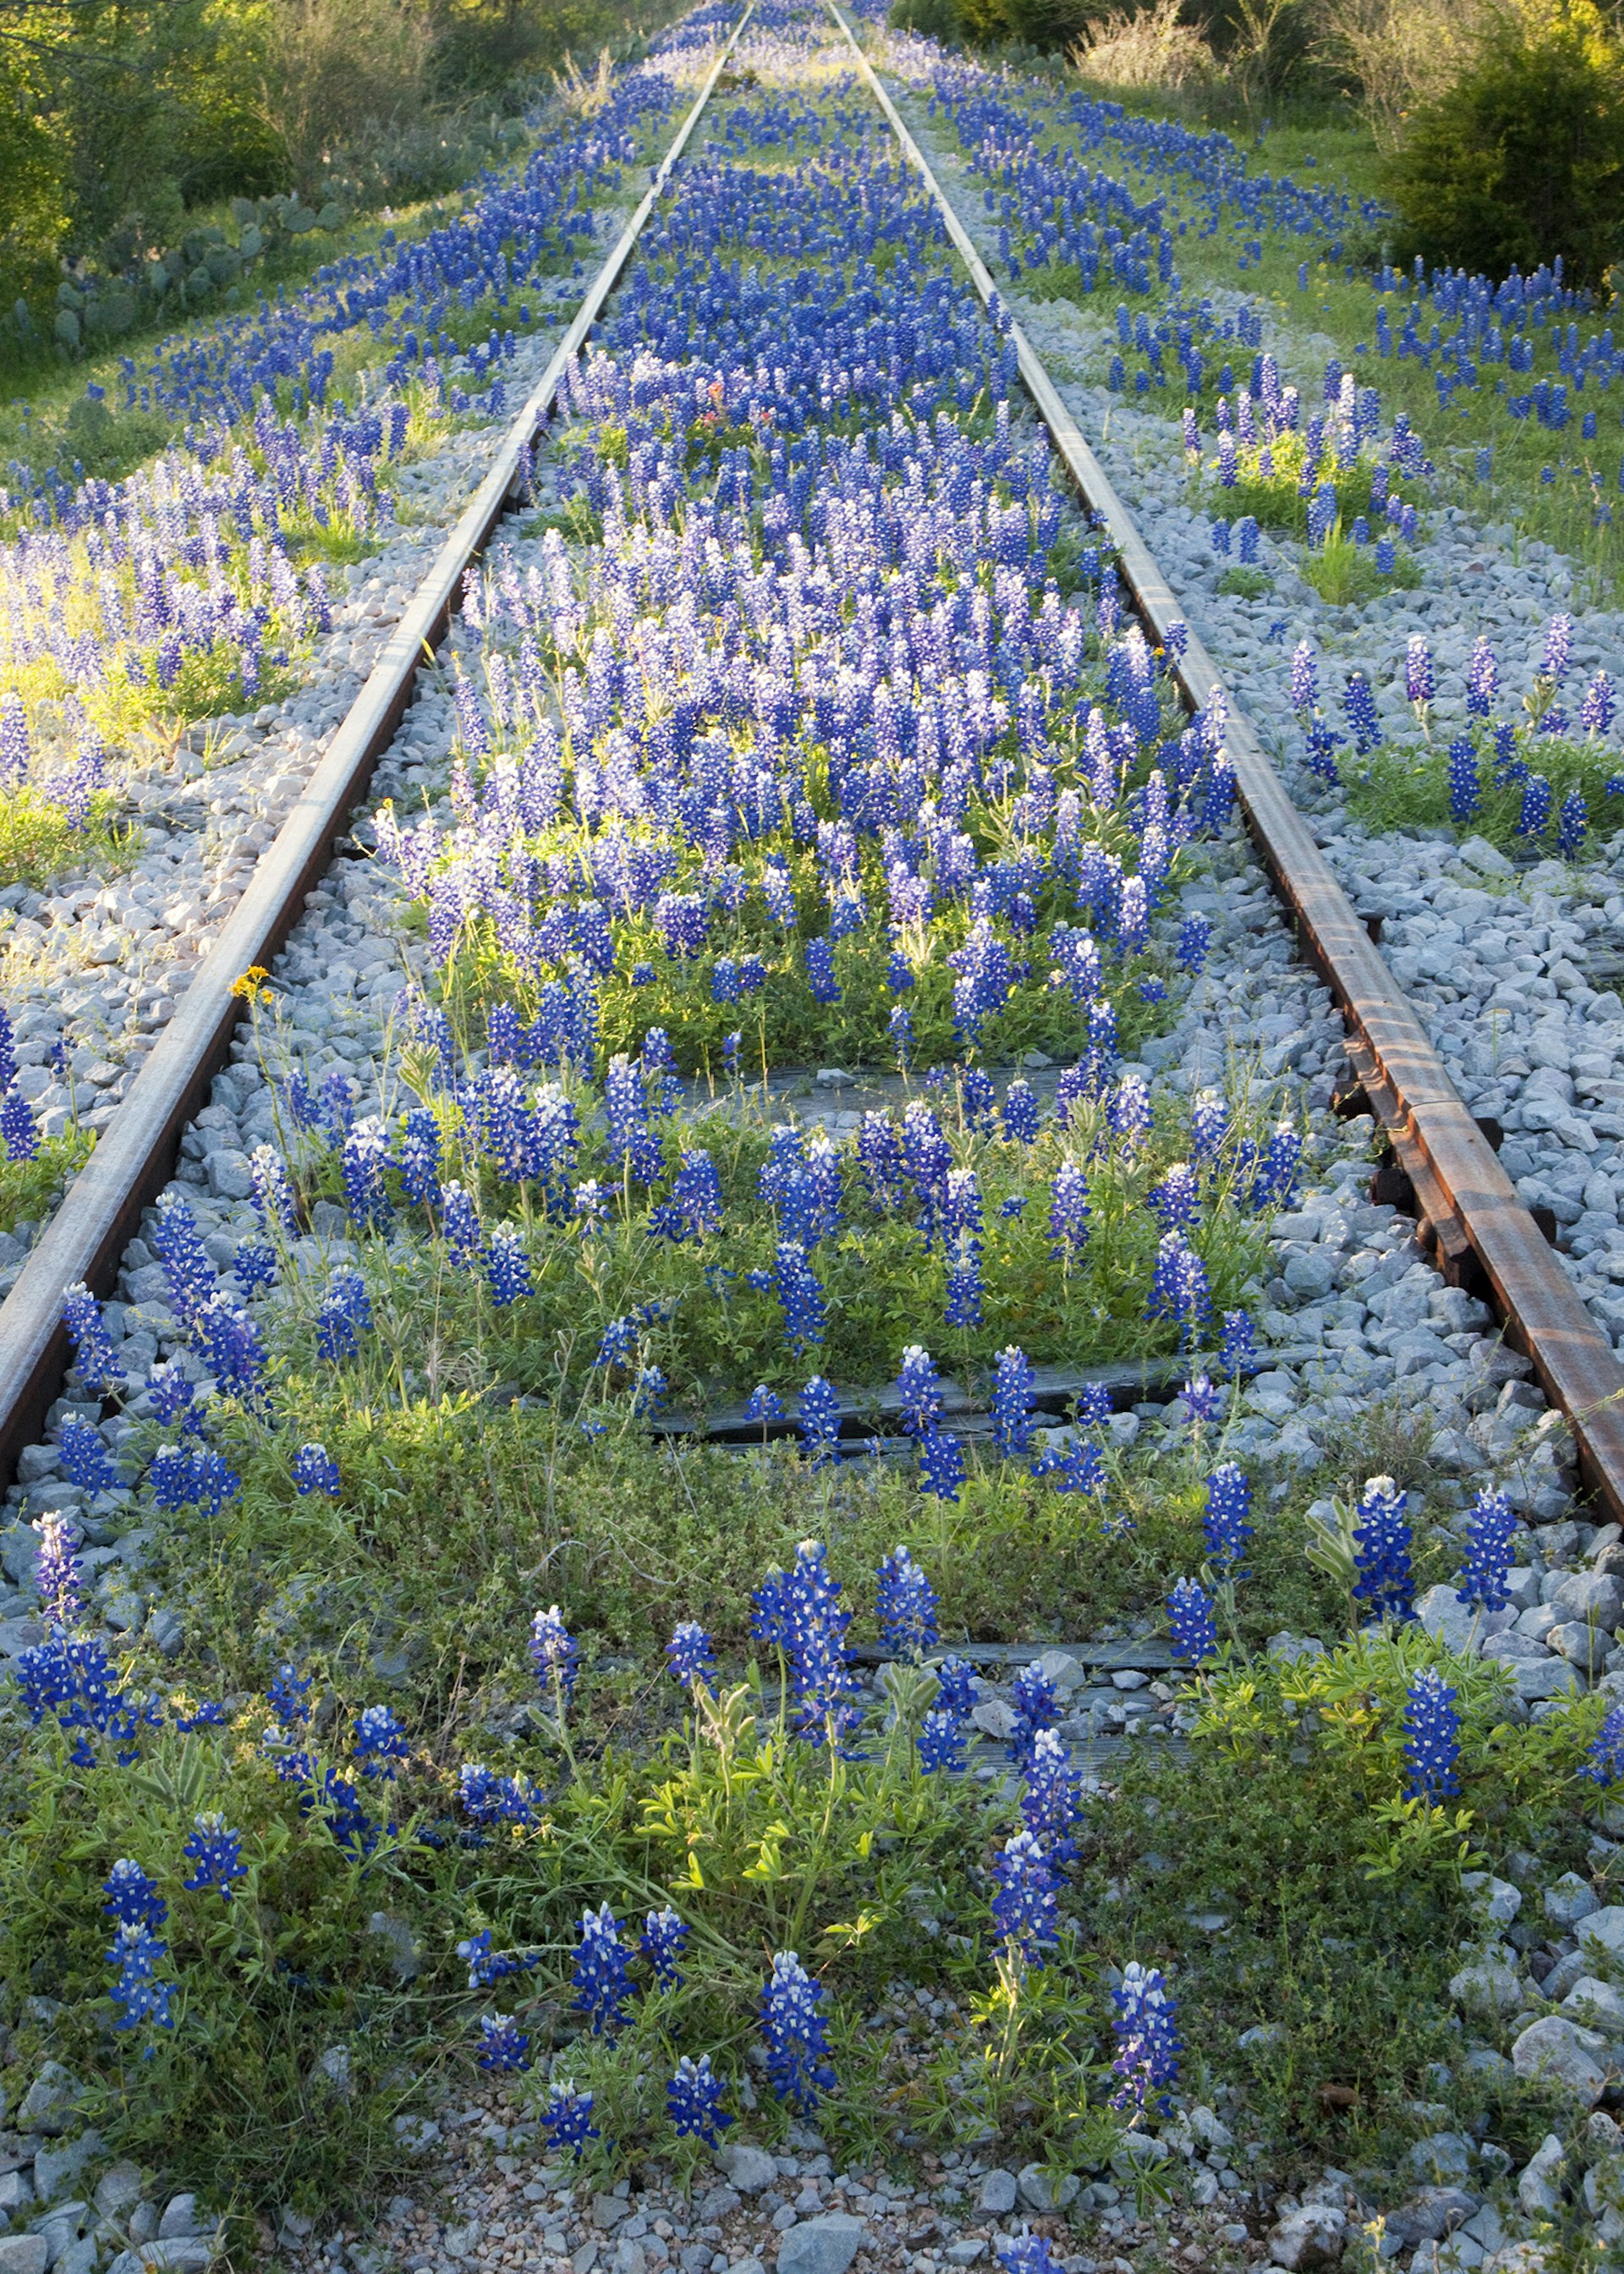 Bluebonnets growing along a disused railroad, Texas